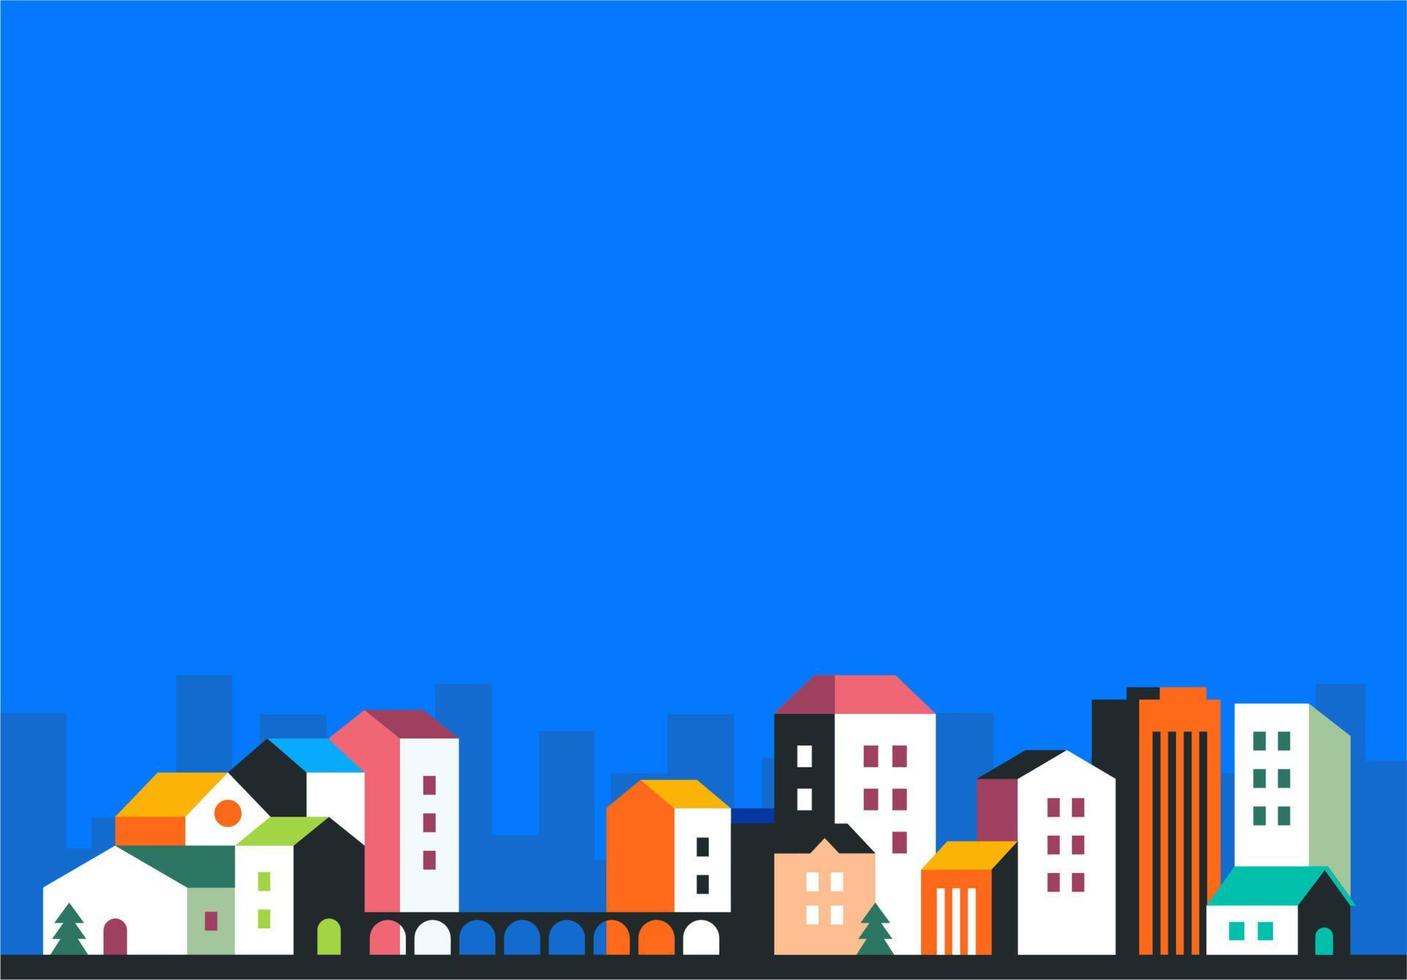 Colorful City Building Skyline Background Design Illustration vector